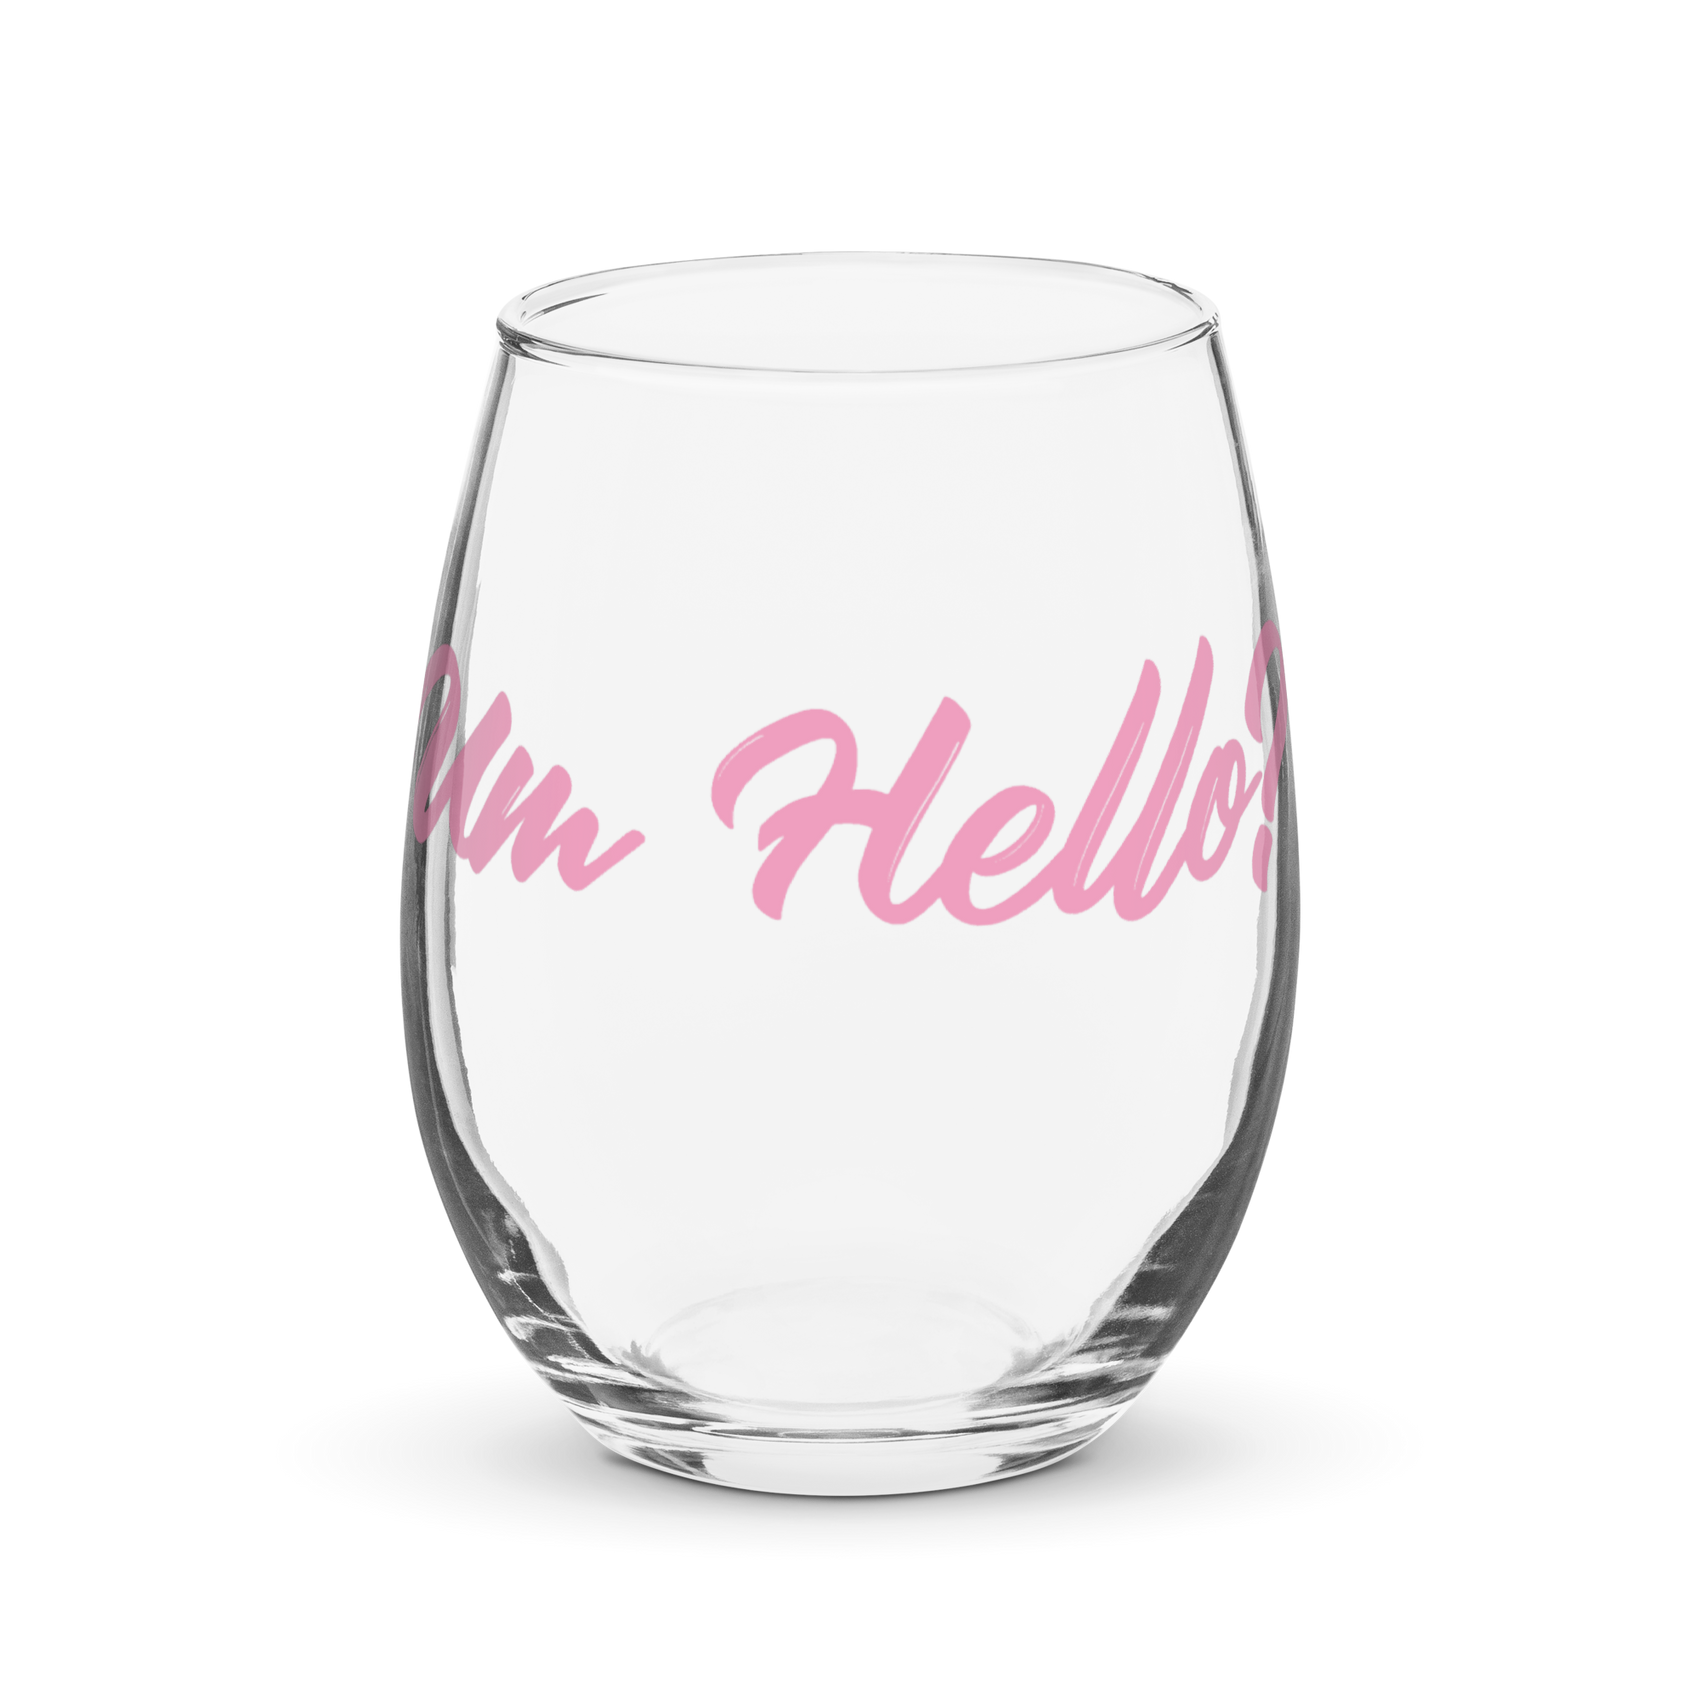 Um Hello? Stemless Wine Glass - Angelina Pivarnick Merchandise